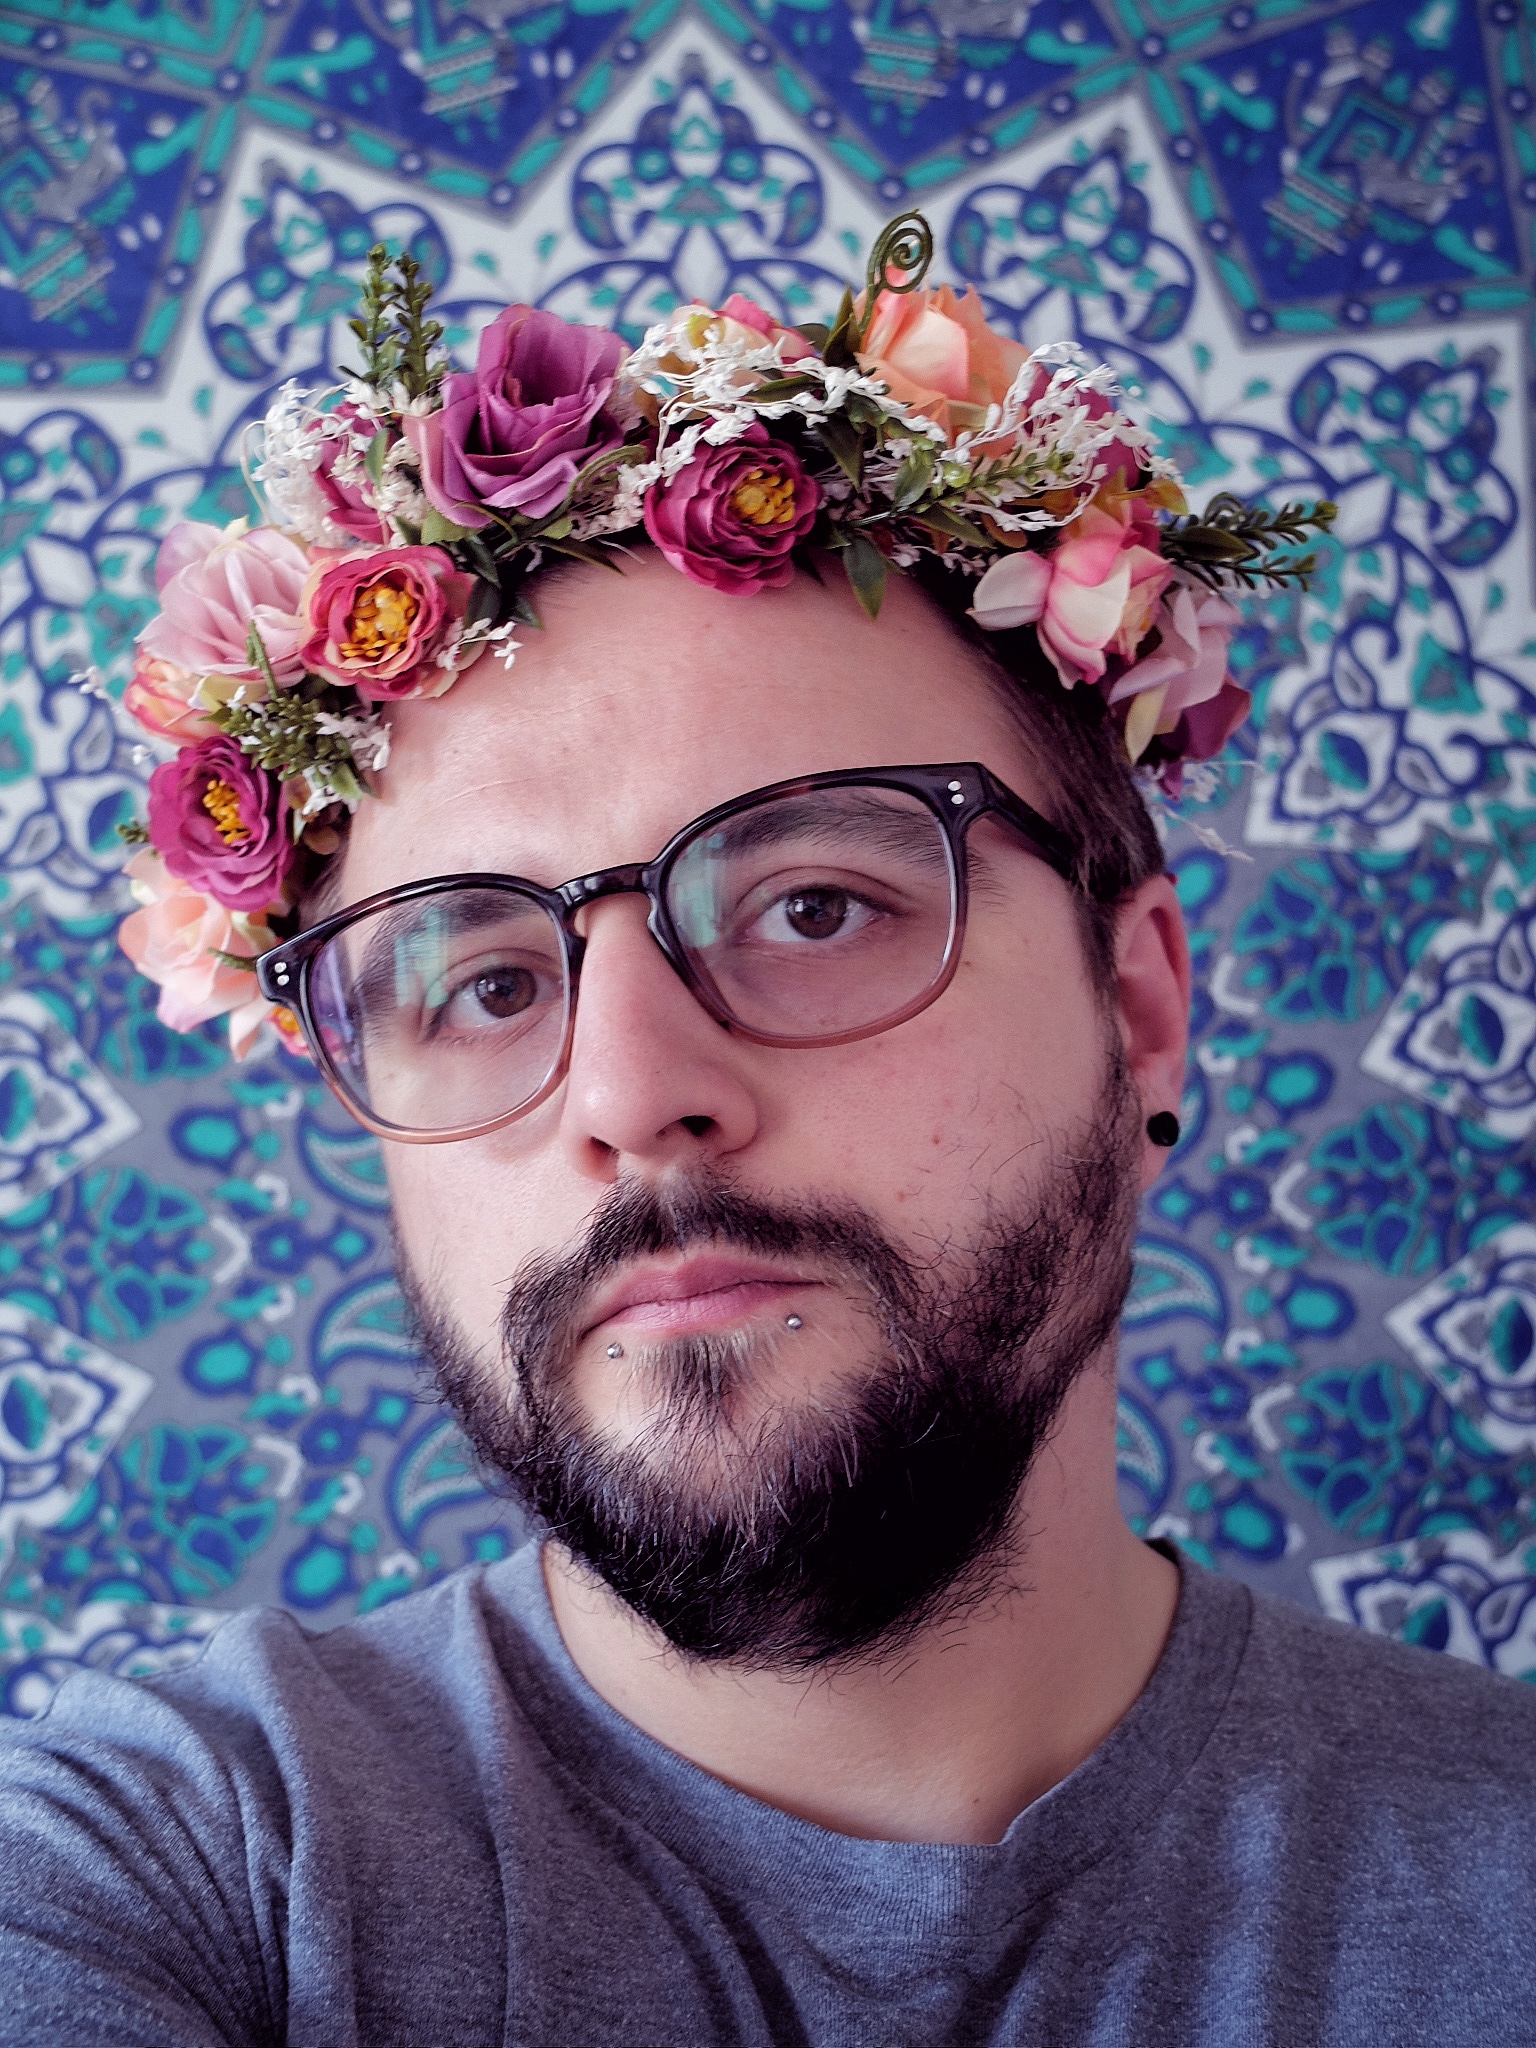 Selfies with flowers